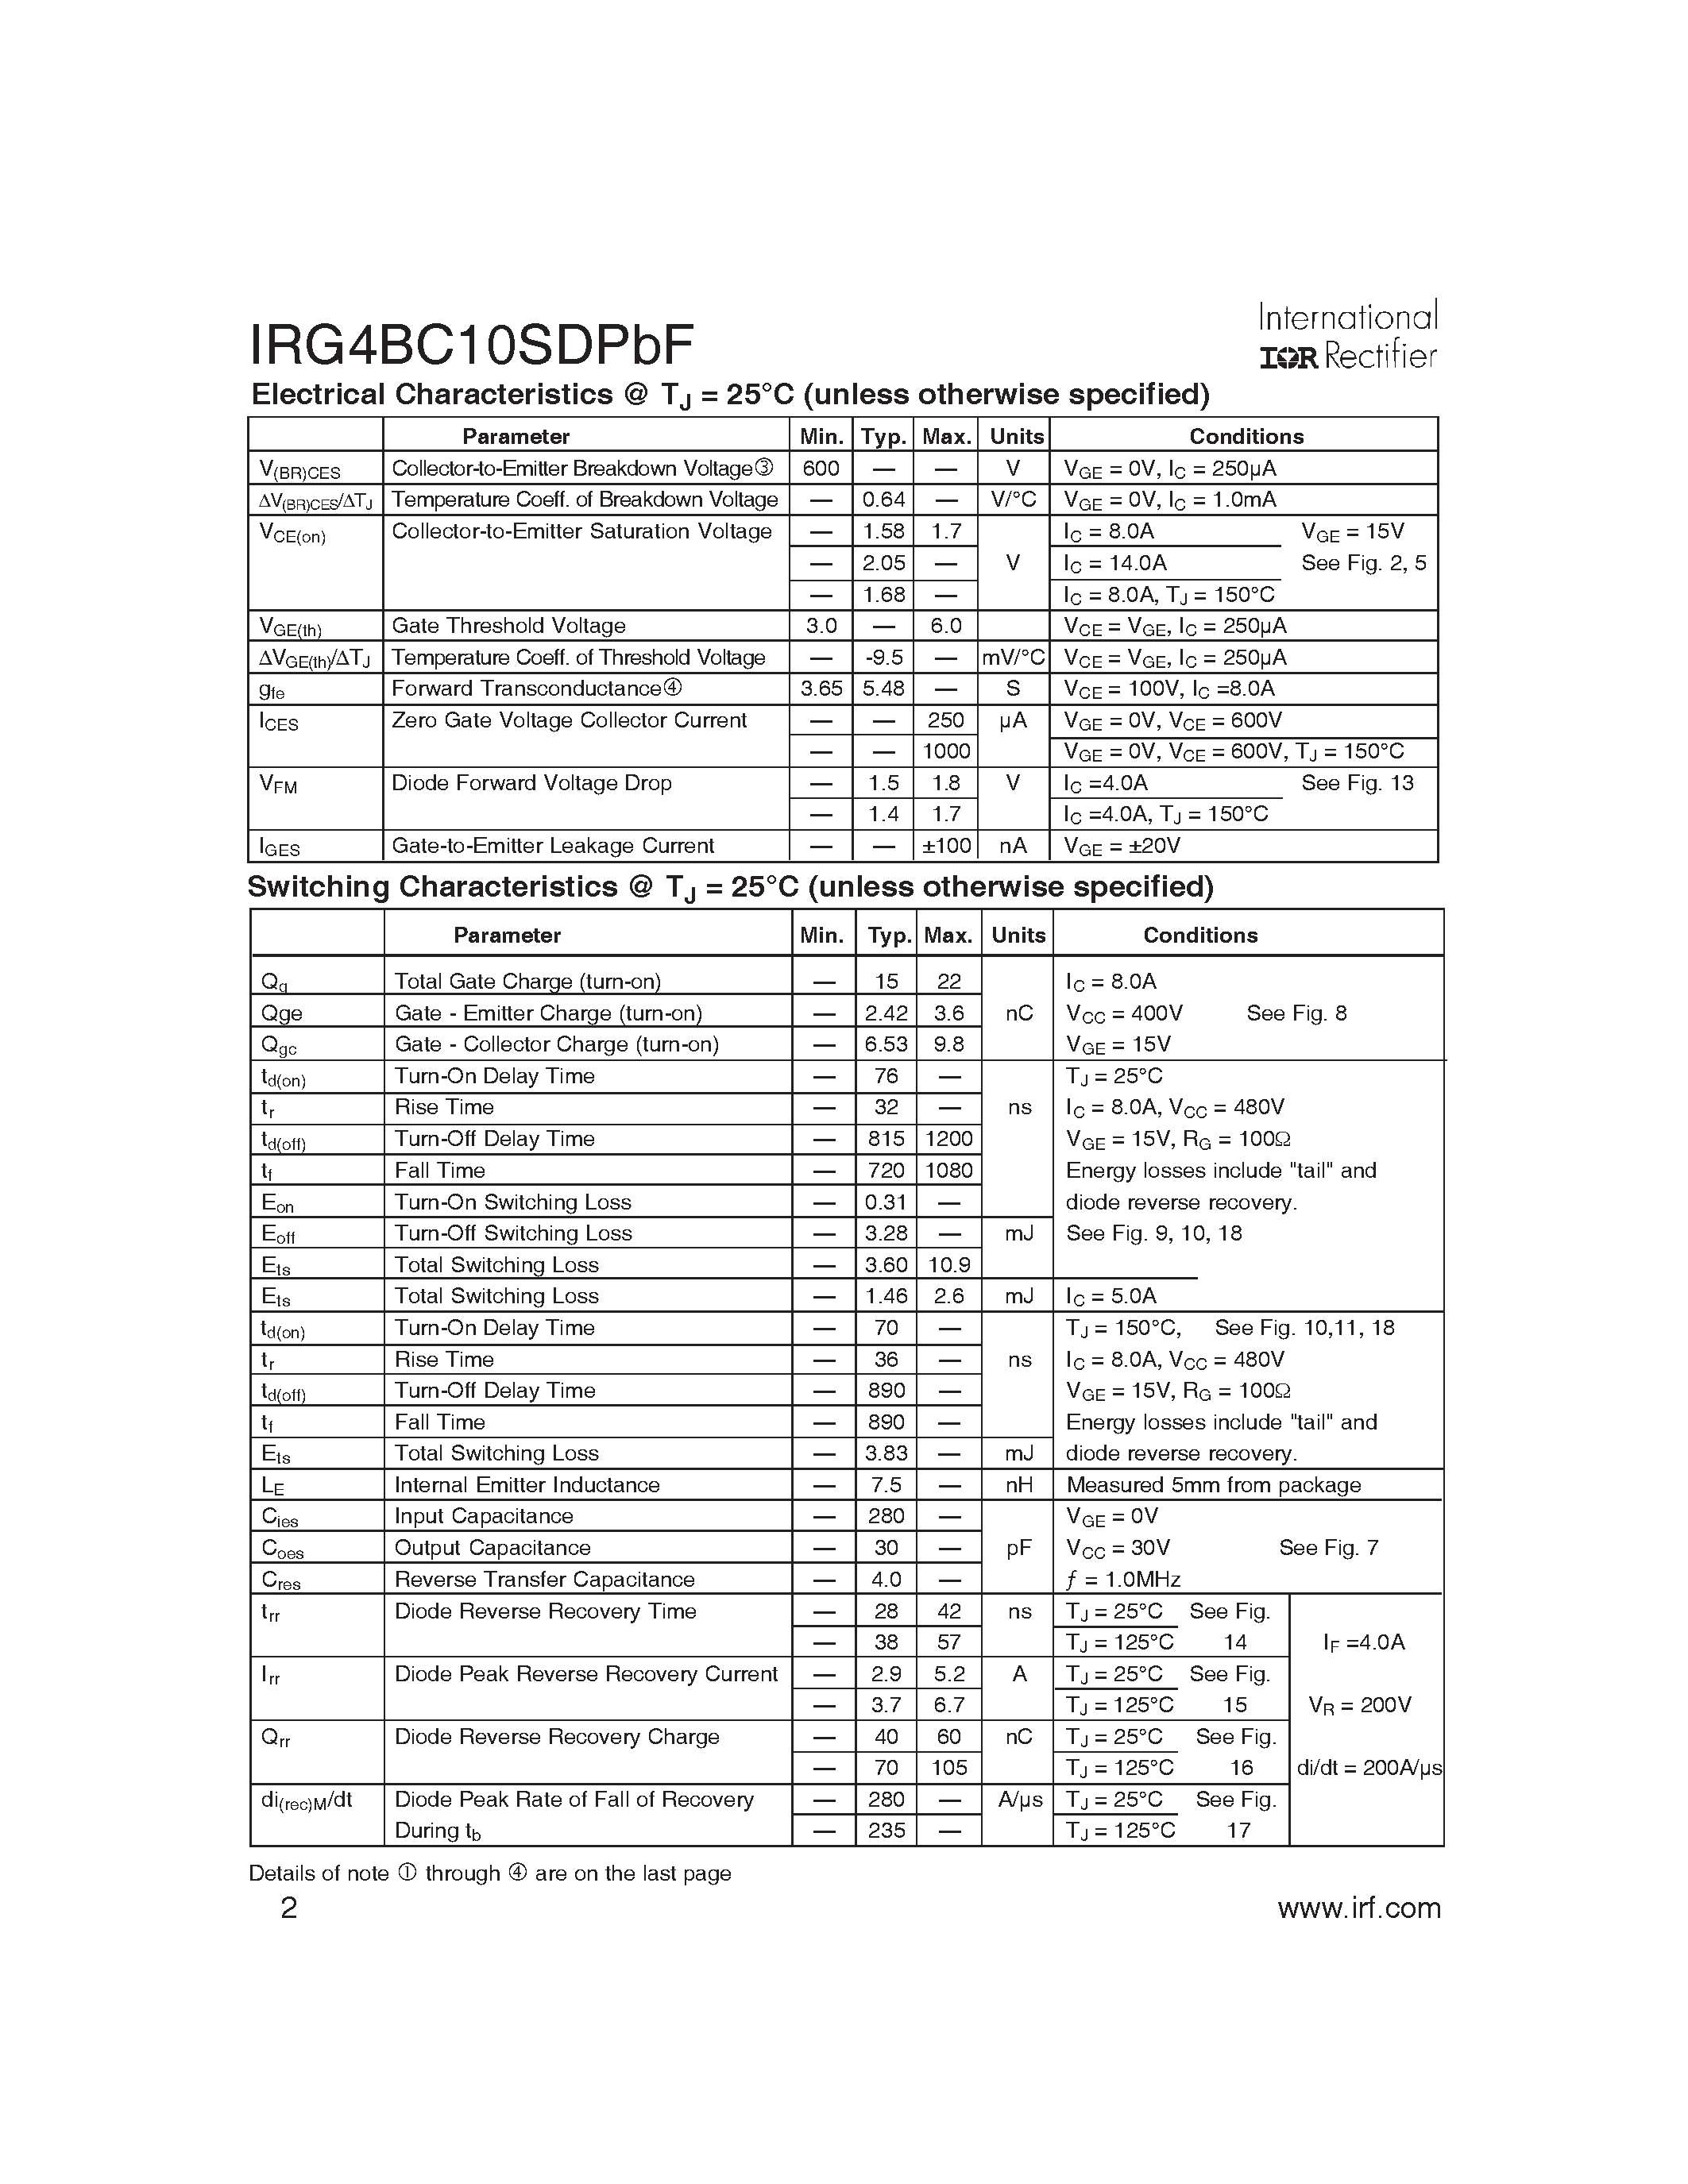 Datasheet IRG4BC10SDPBF - INSULATED GATE BIPOLAR TRANSISTOR page 2